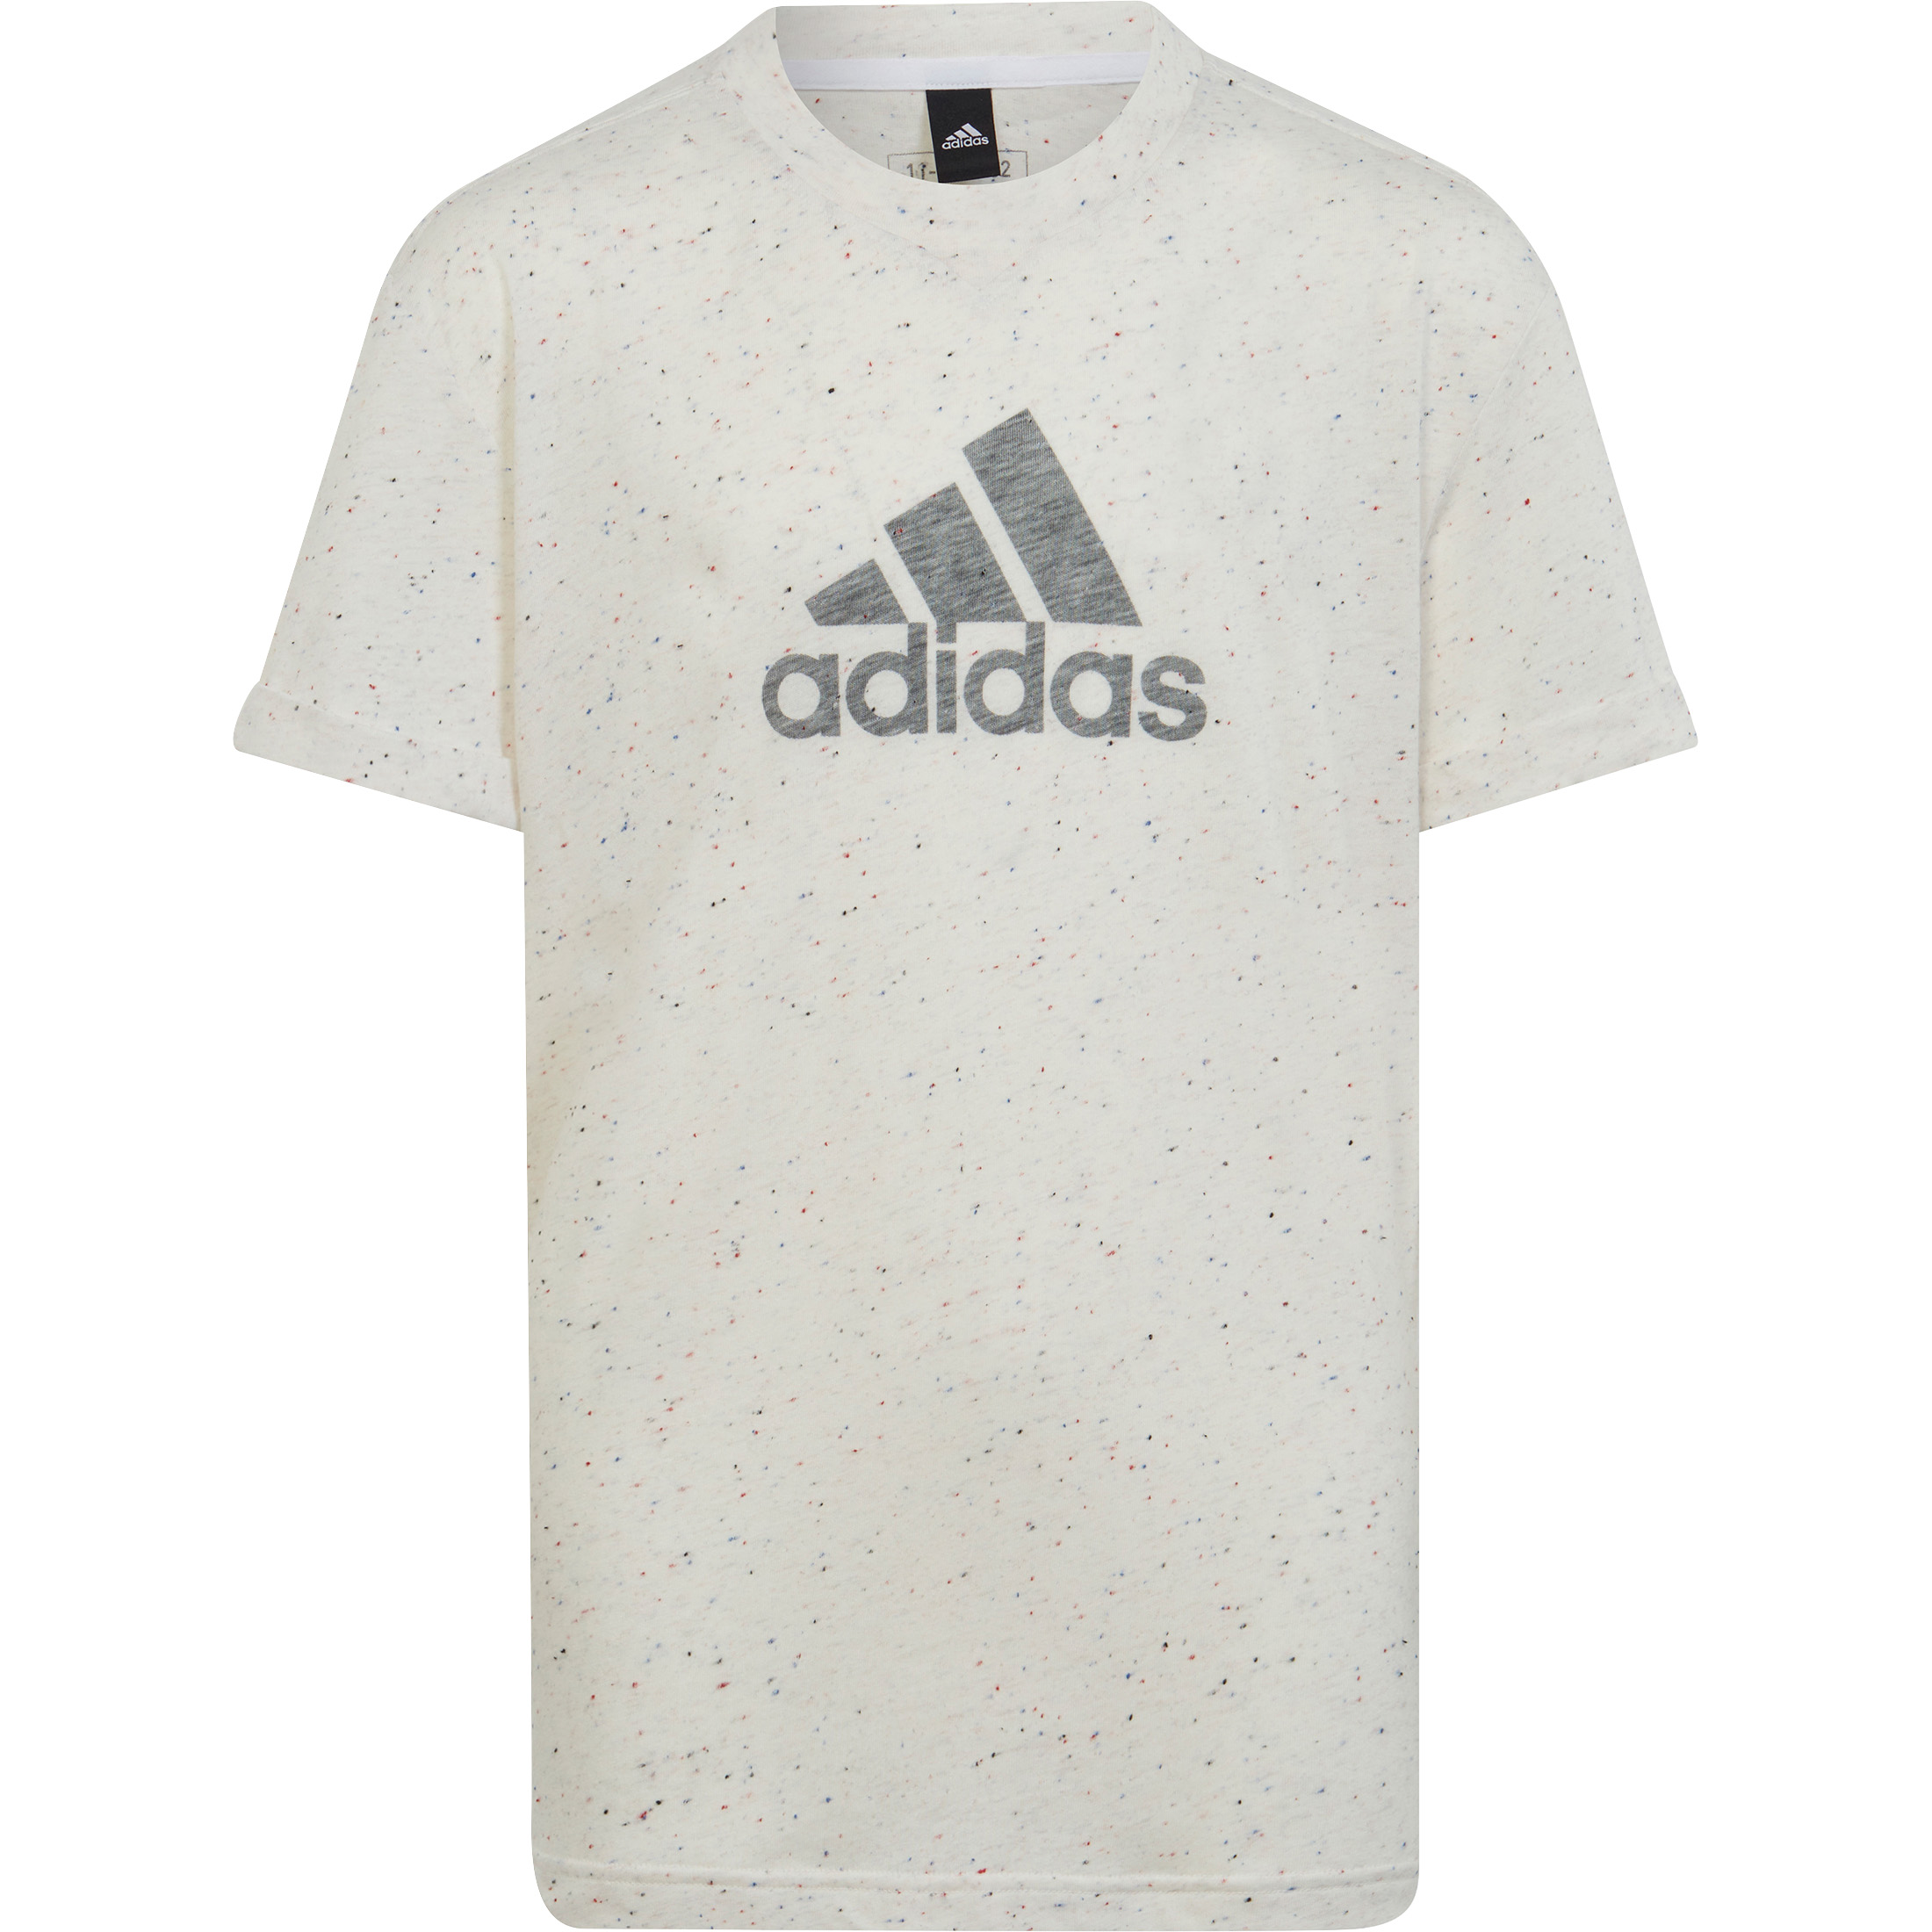 Adidas Future Icons Winners shirt junior white melange grey four